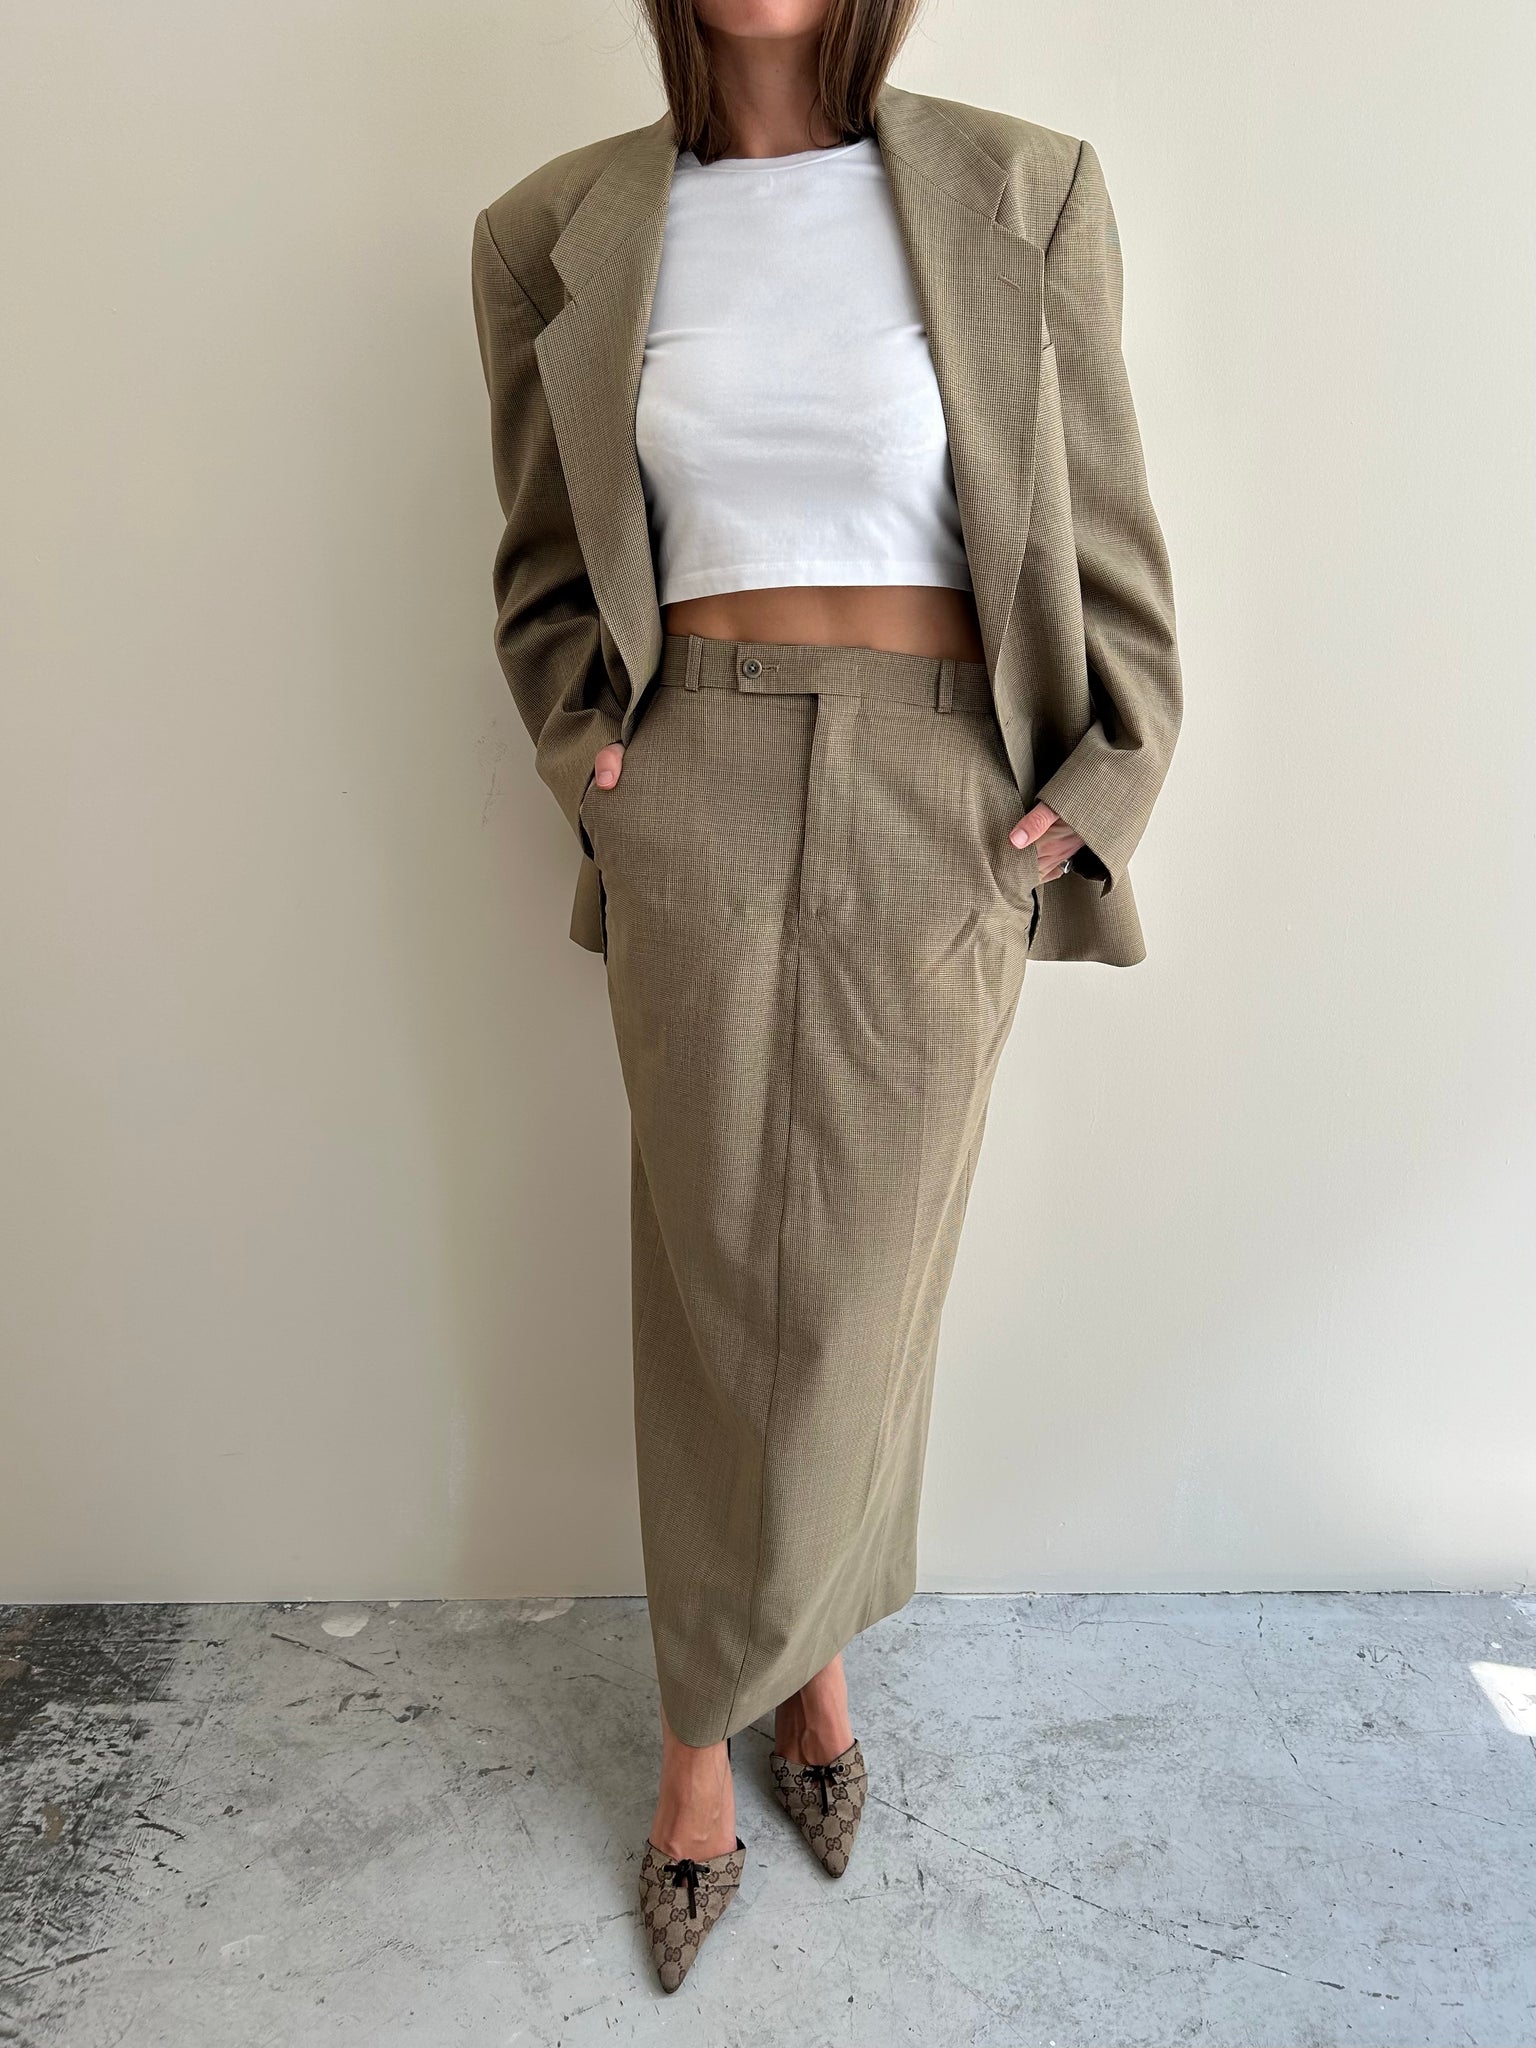 Long skirt suit in brown tones